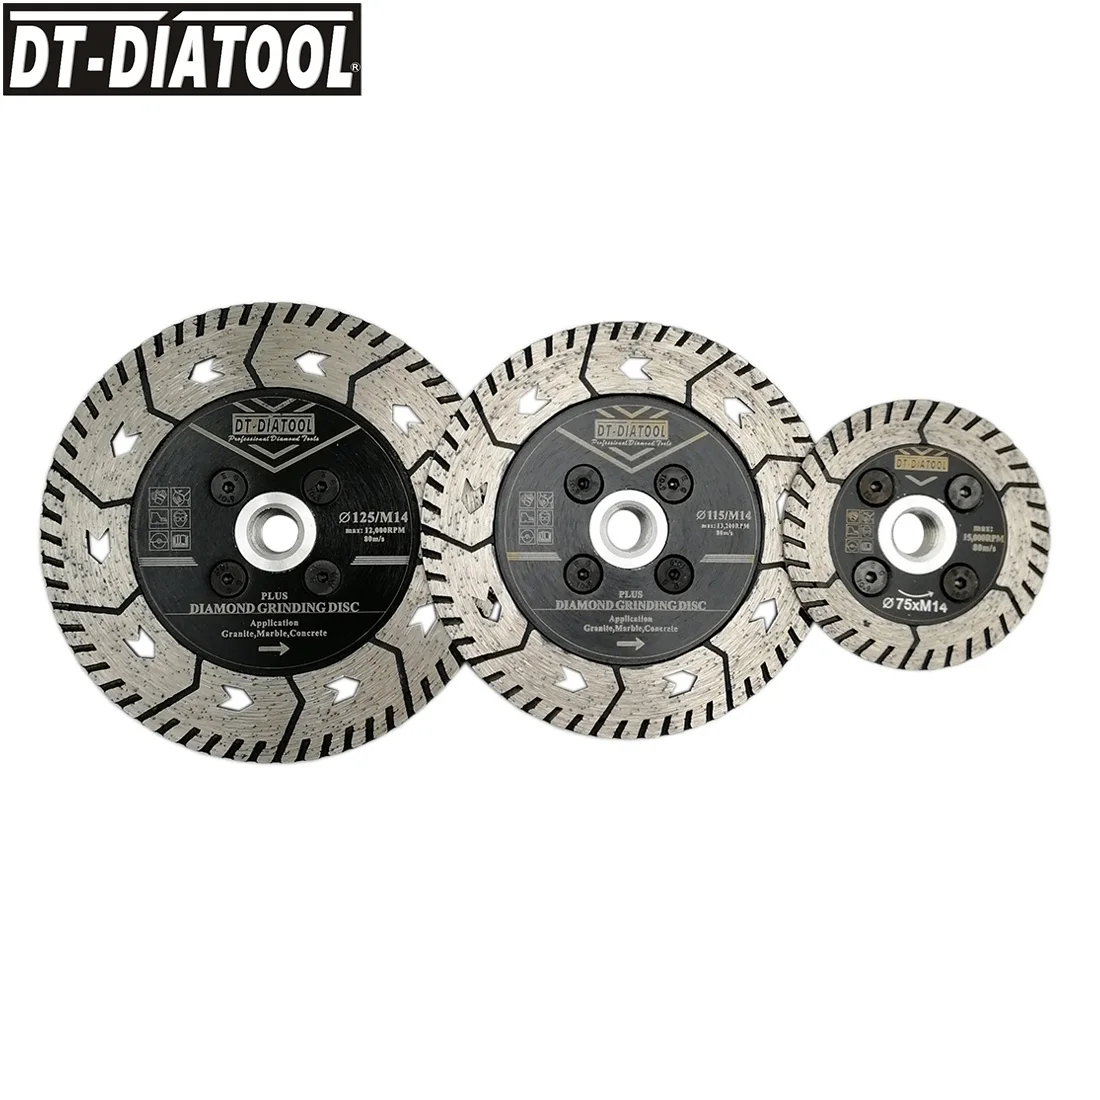 DT-DIATOOL 1 adet Elmas Çift Testere Bıçağı taşlama diski Granit Mermer Kesme Diski M14 veya 5/8-11 diş 3 